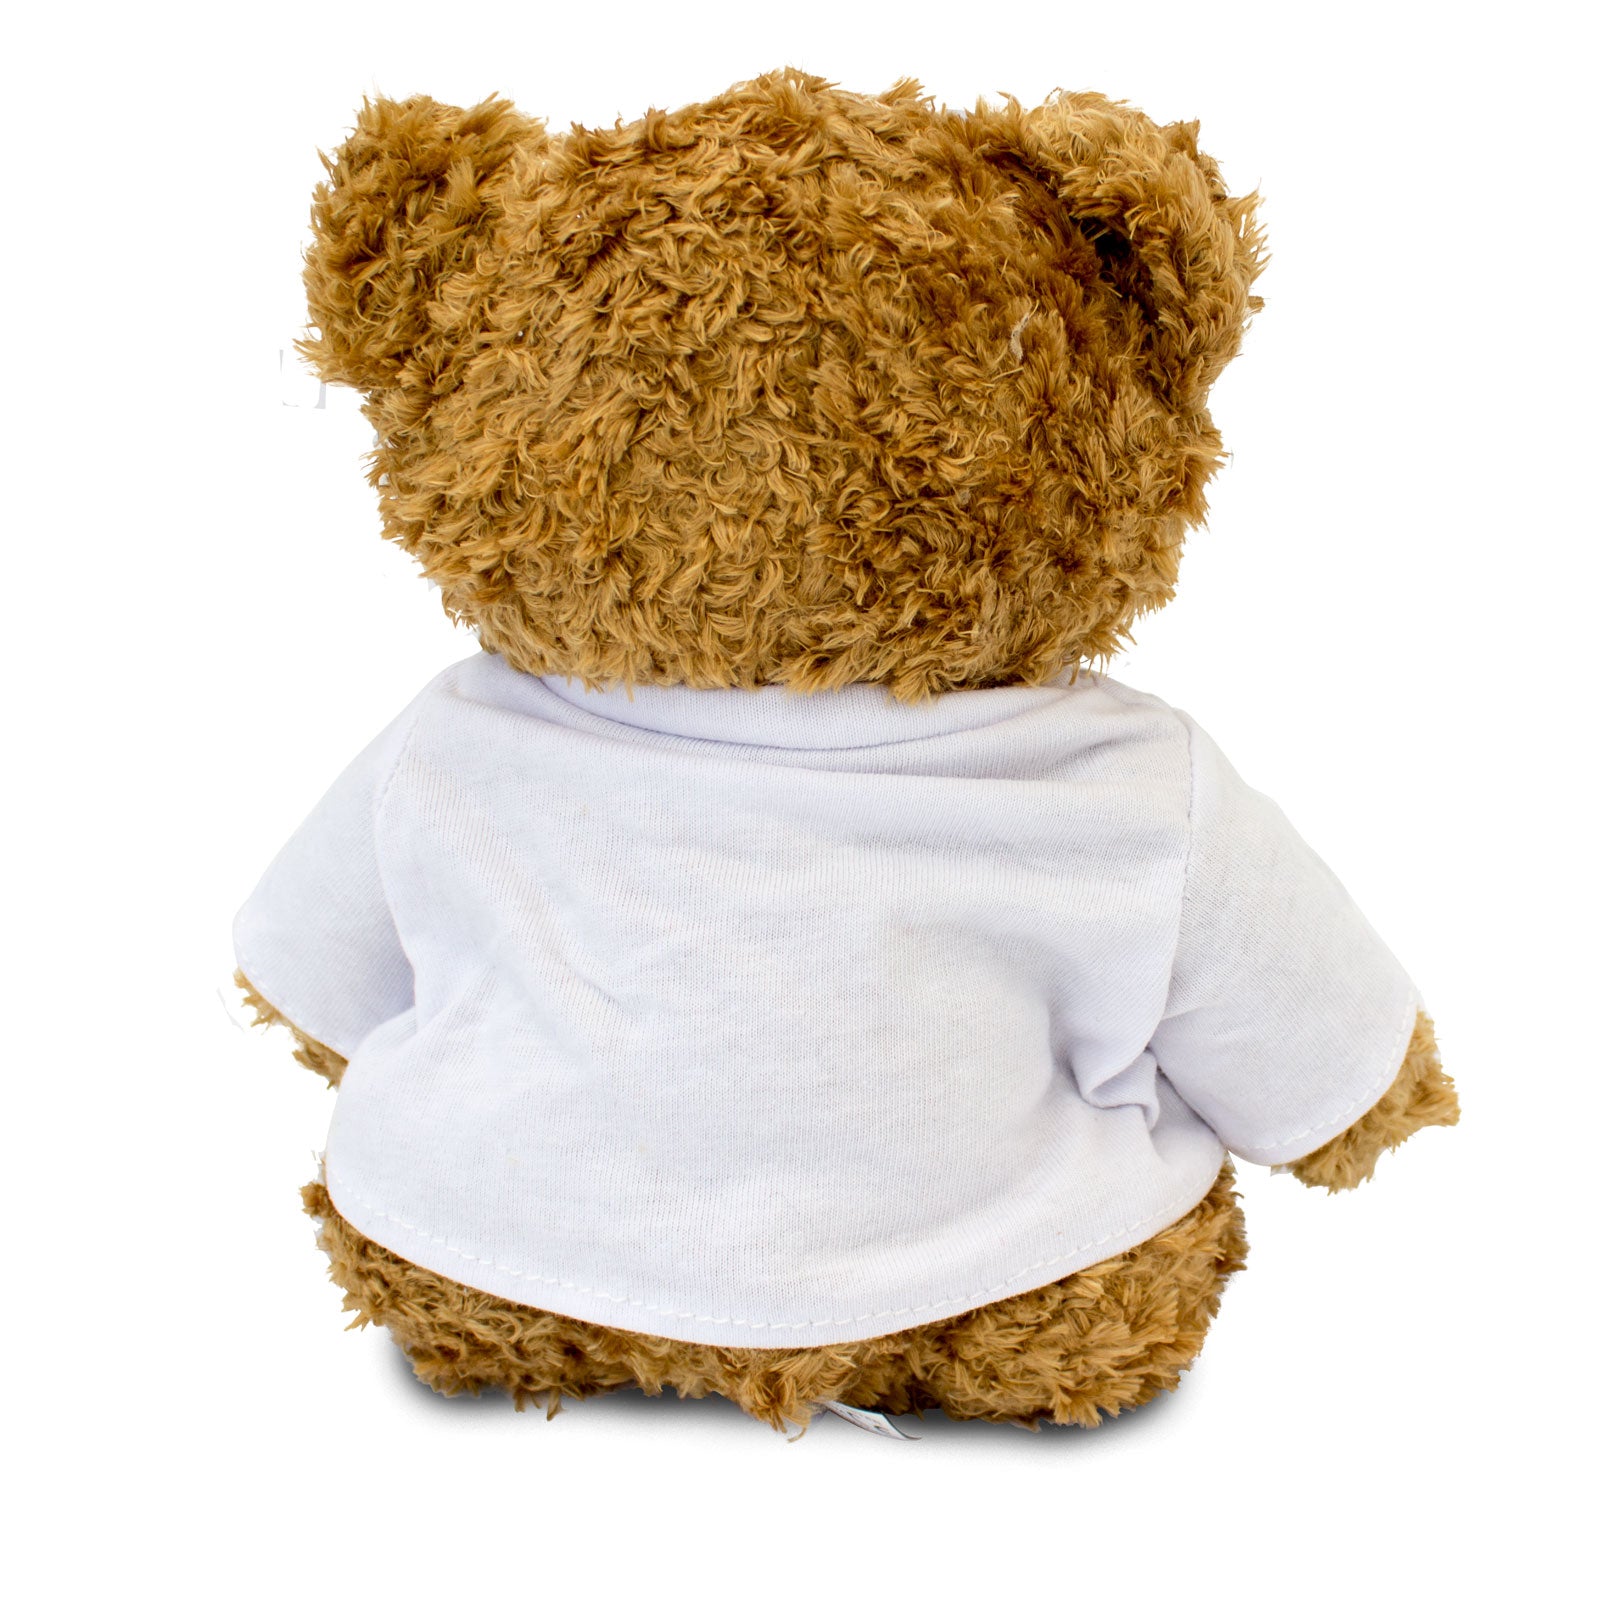 Best Nana In The World Teddy Bear - Gift Present